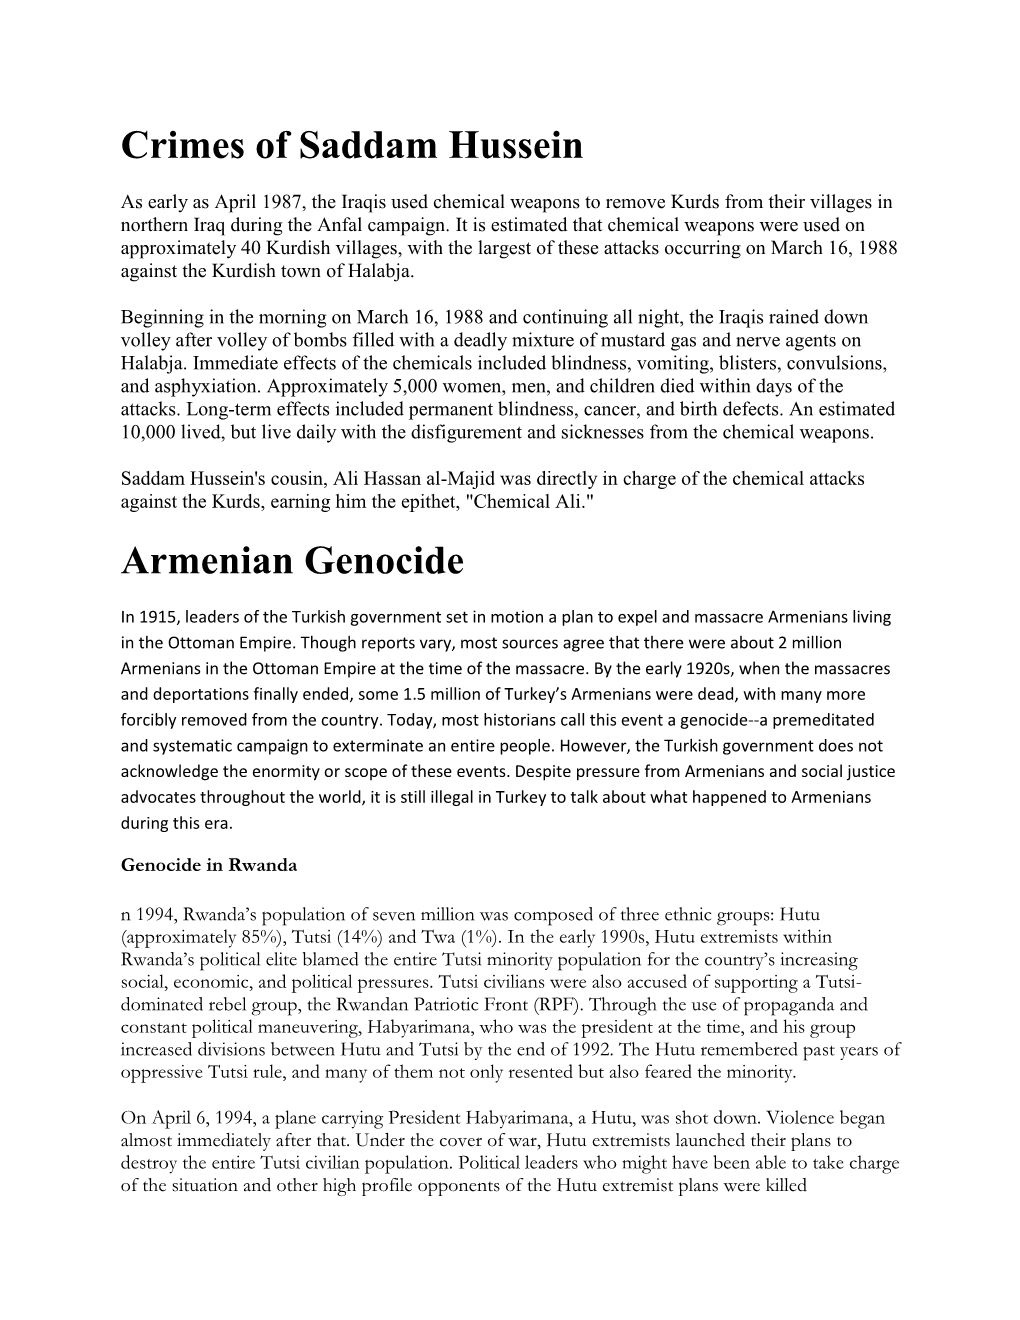 Crimes of Saddam Hussein Armenian Genocide